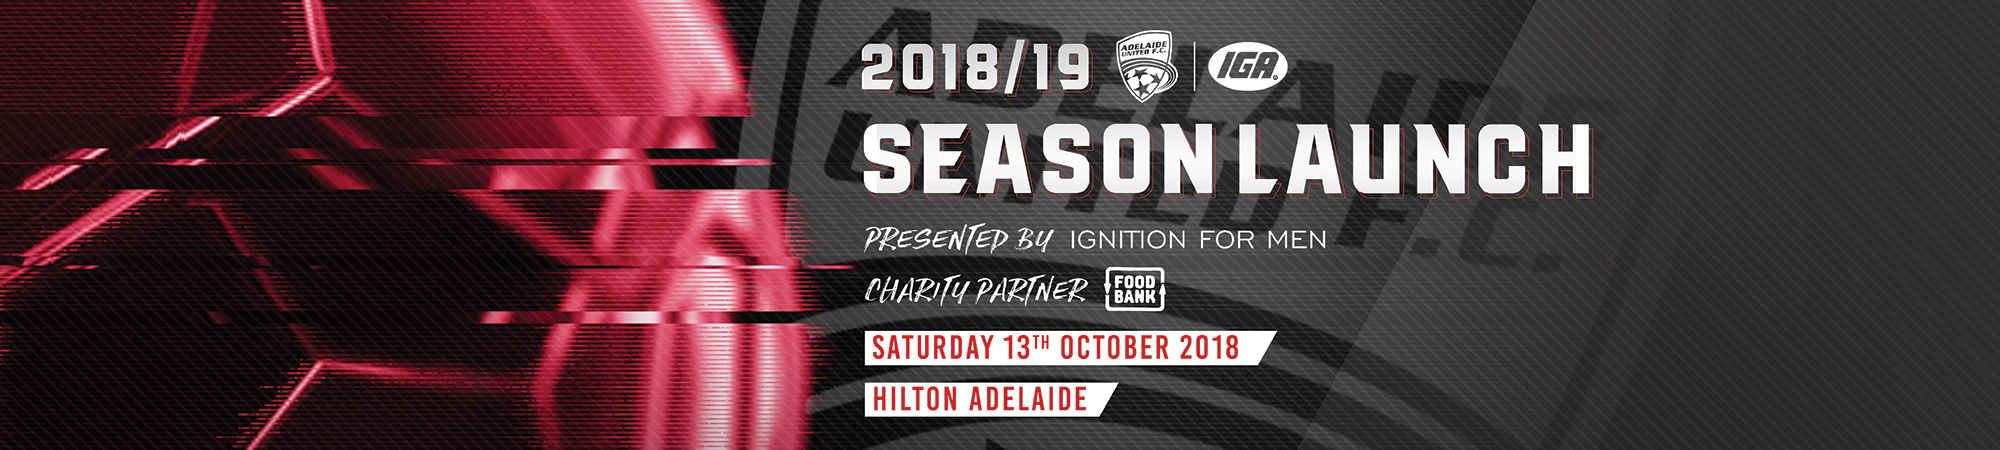 2018/19 Adelaide United Season Launch